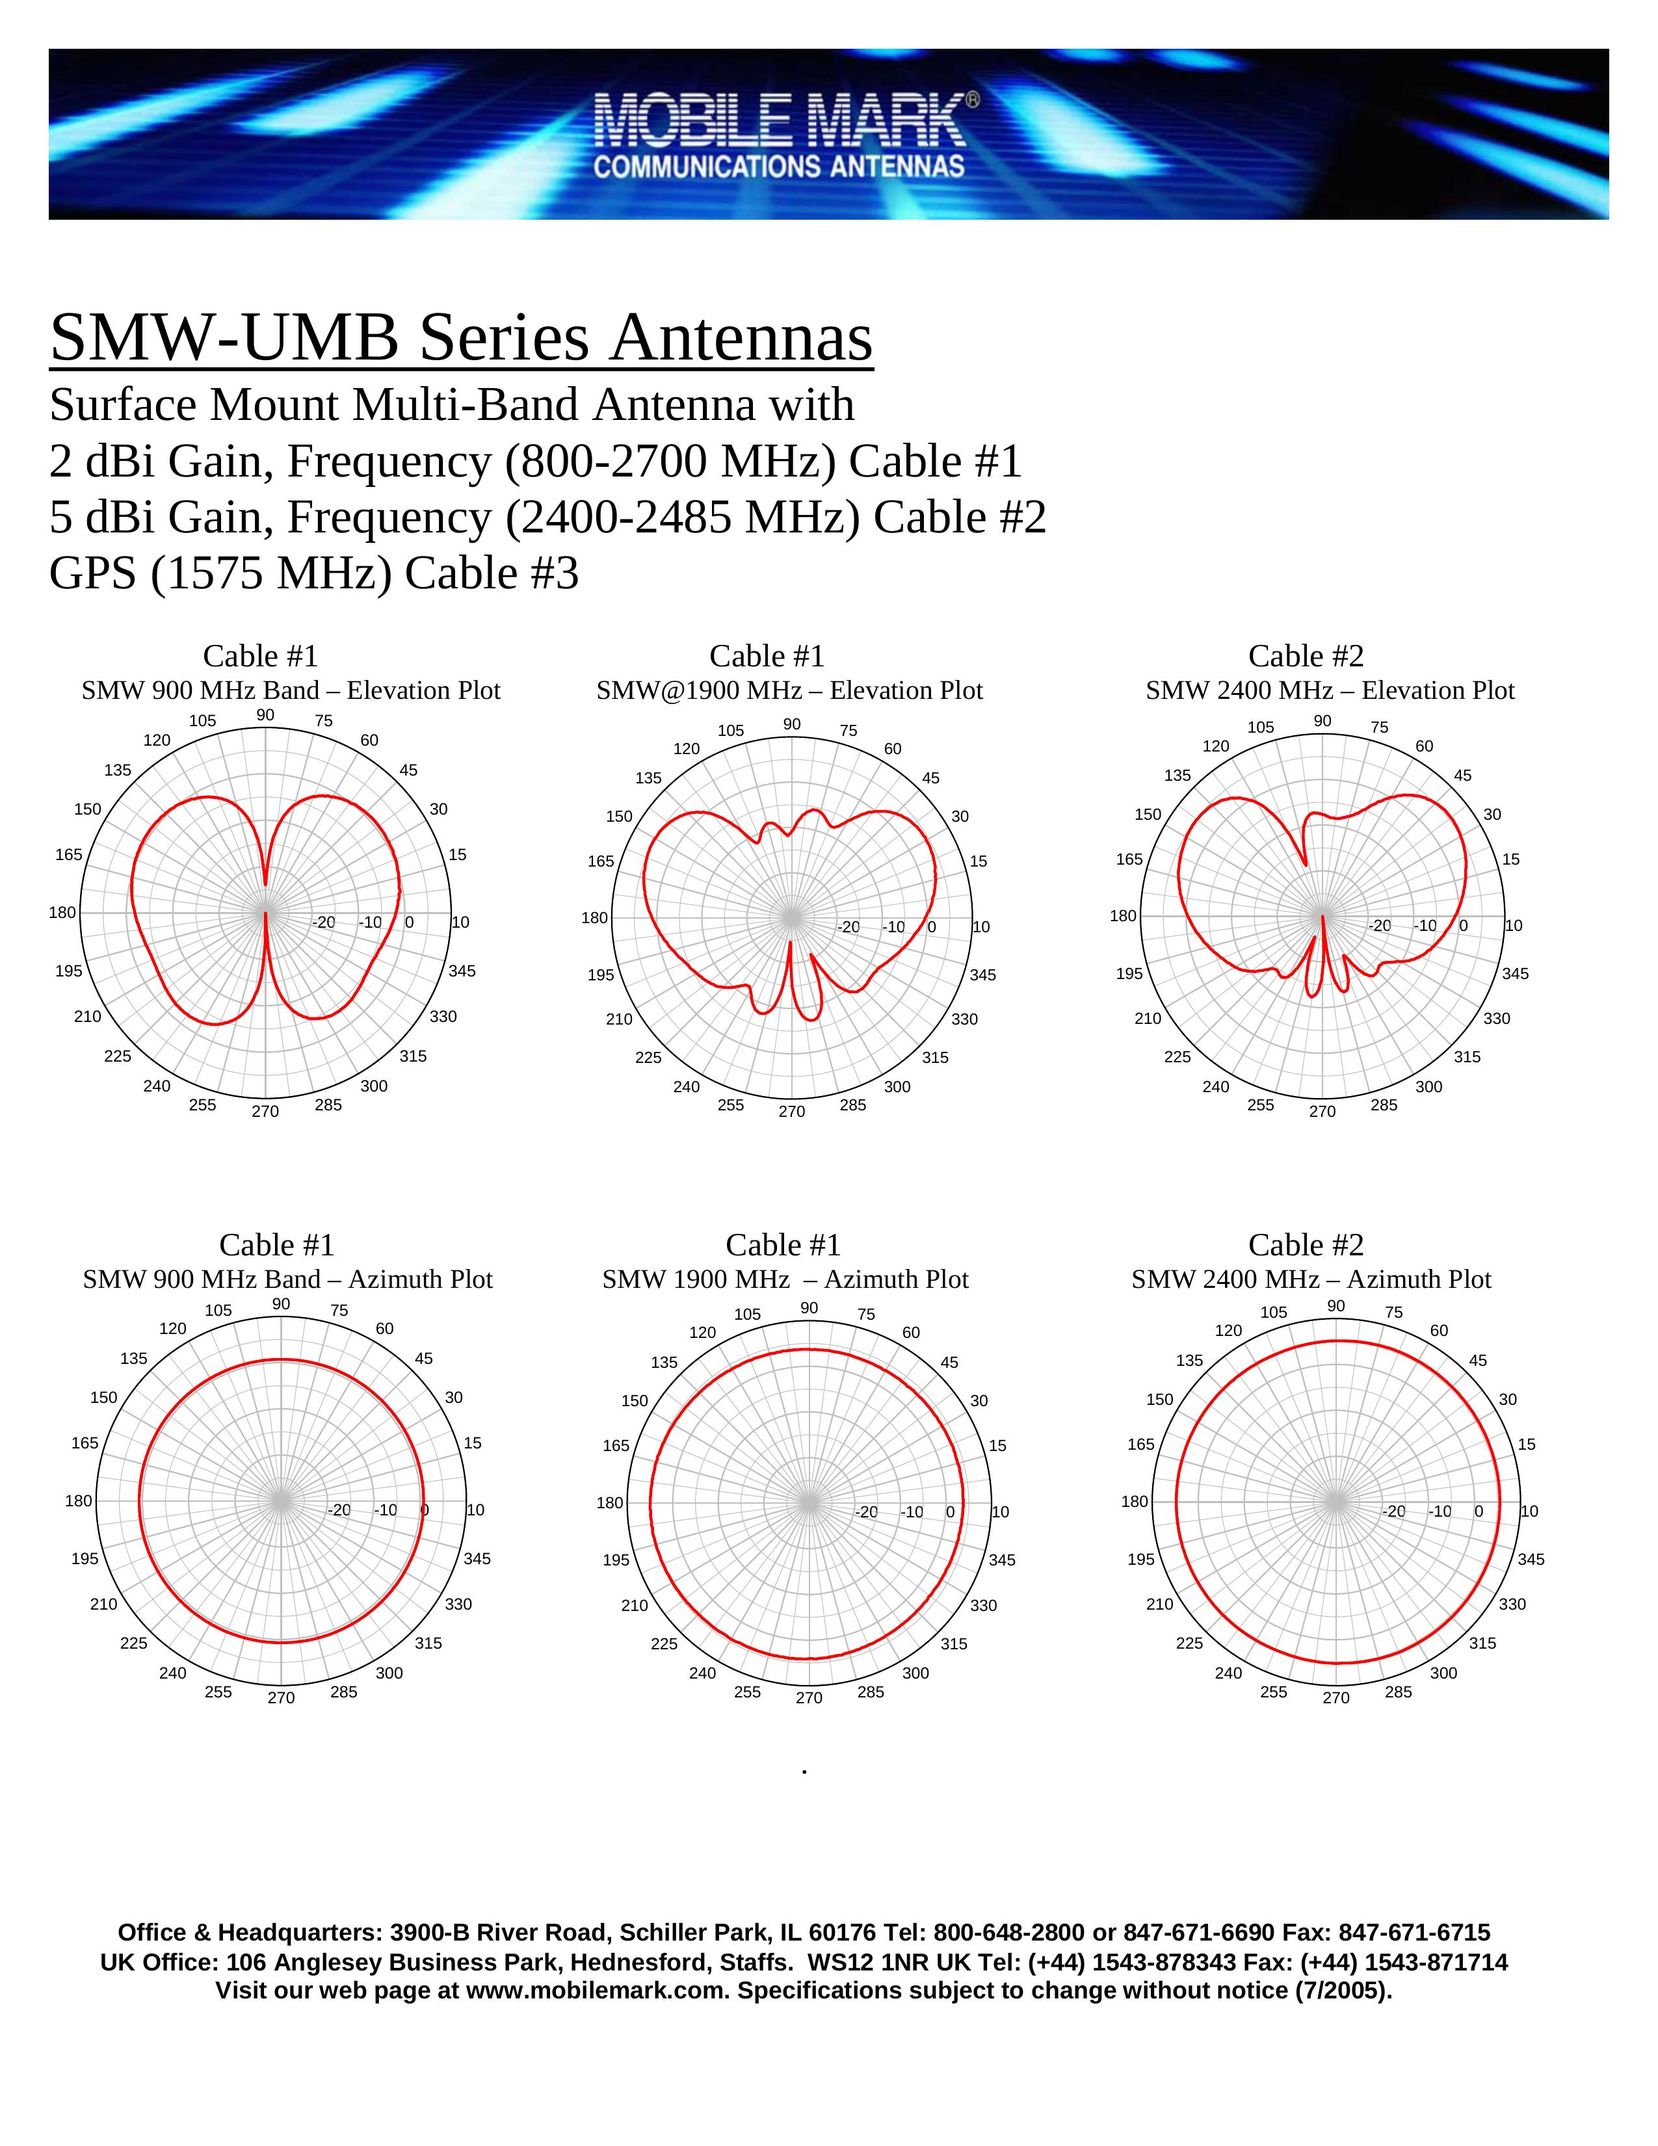 Mobile Mark SMW-UMB-3A002A Radio Antenna User Manual